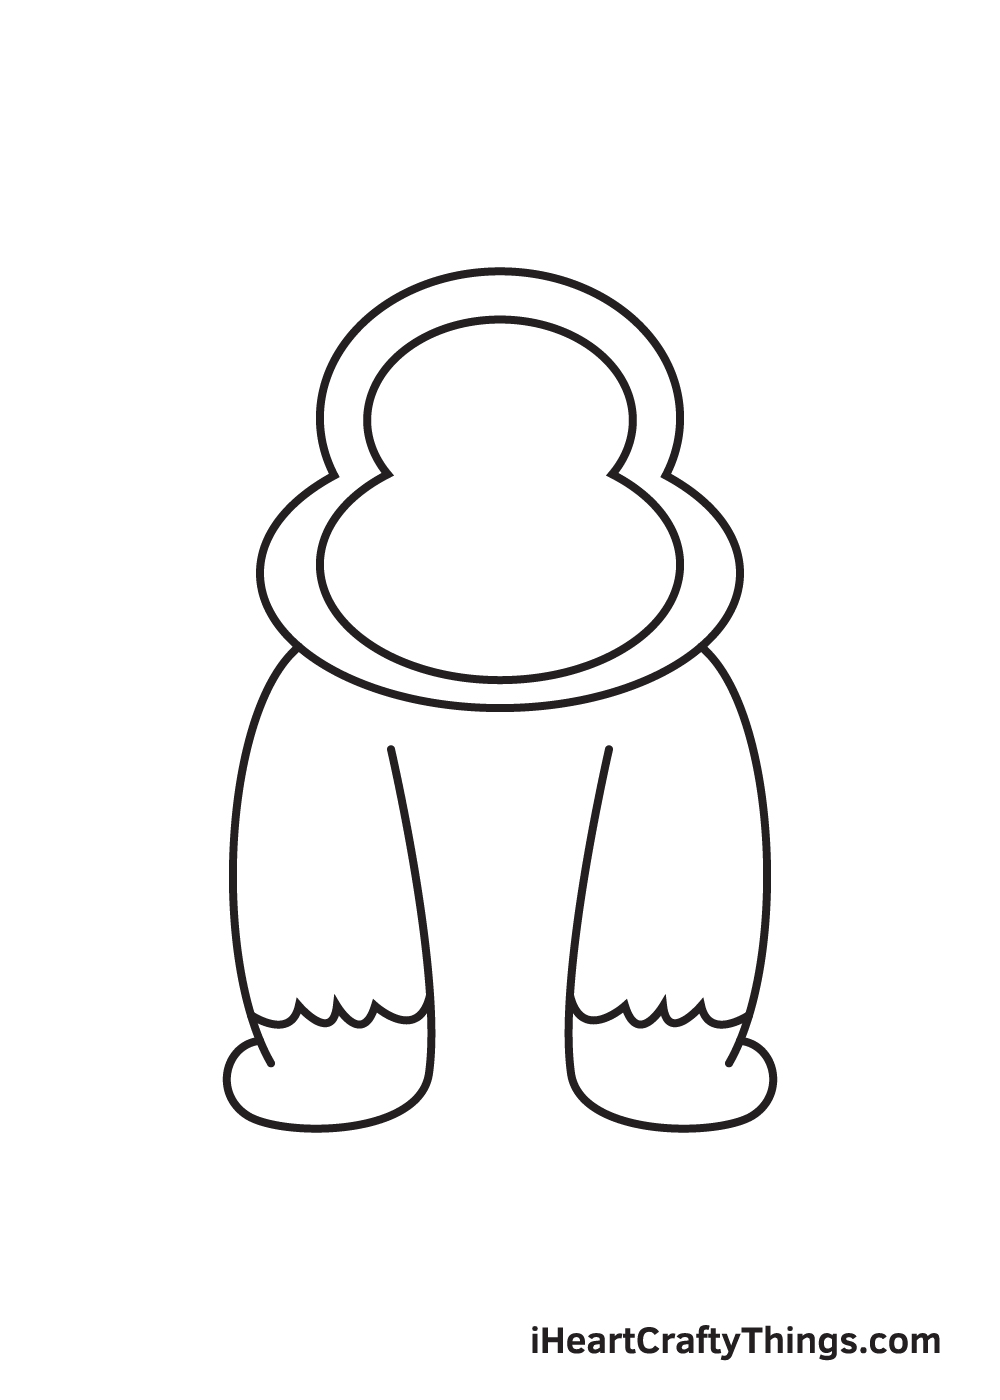 gorilla drawing - step 6